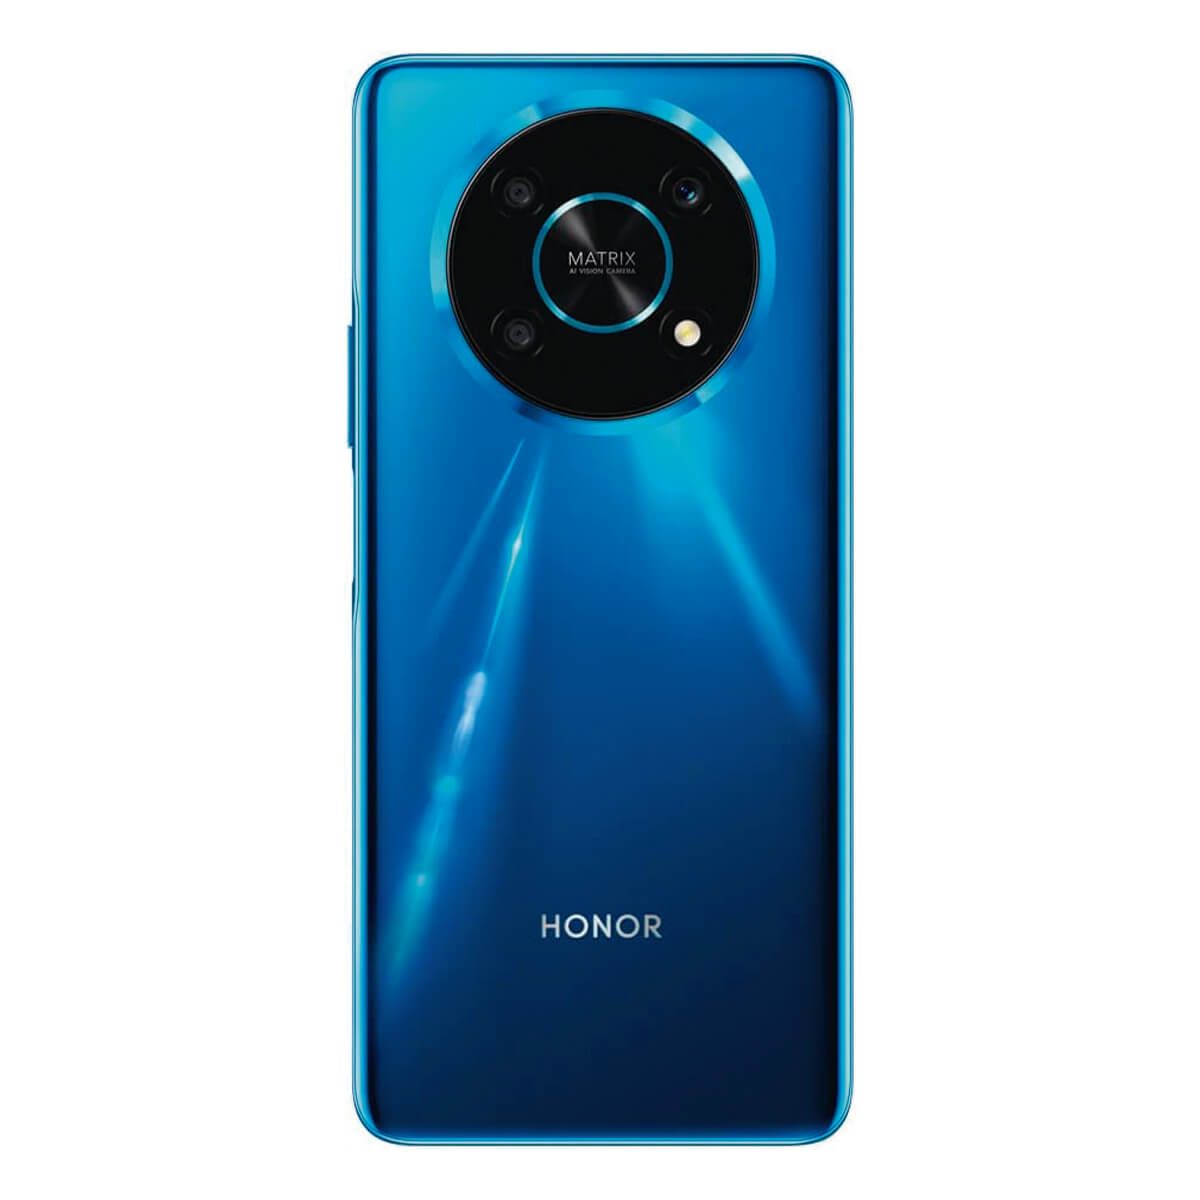 Honor Magic4 Lite 5G 6Go/128Go Bleu (Bleu Océan) Double SIM ANY-NX1